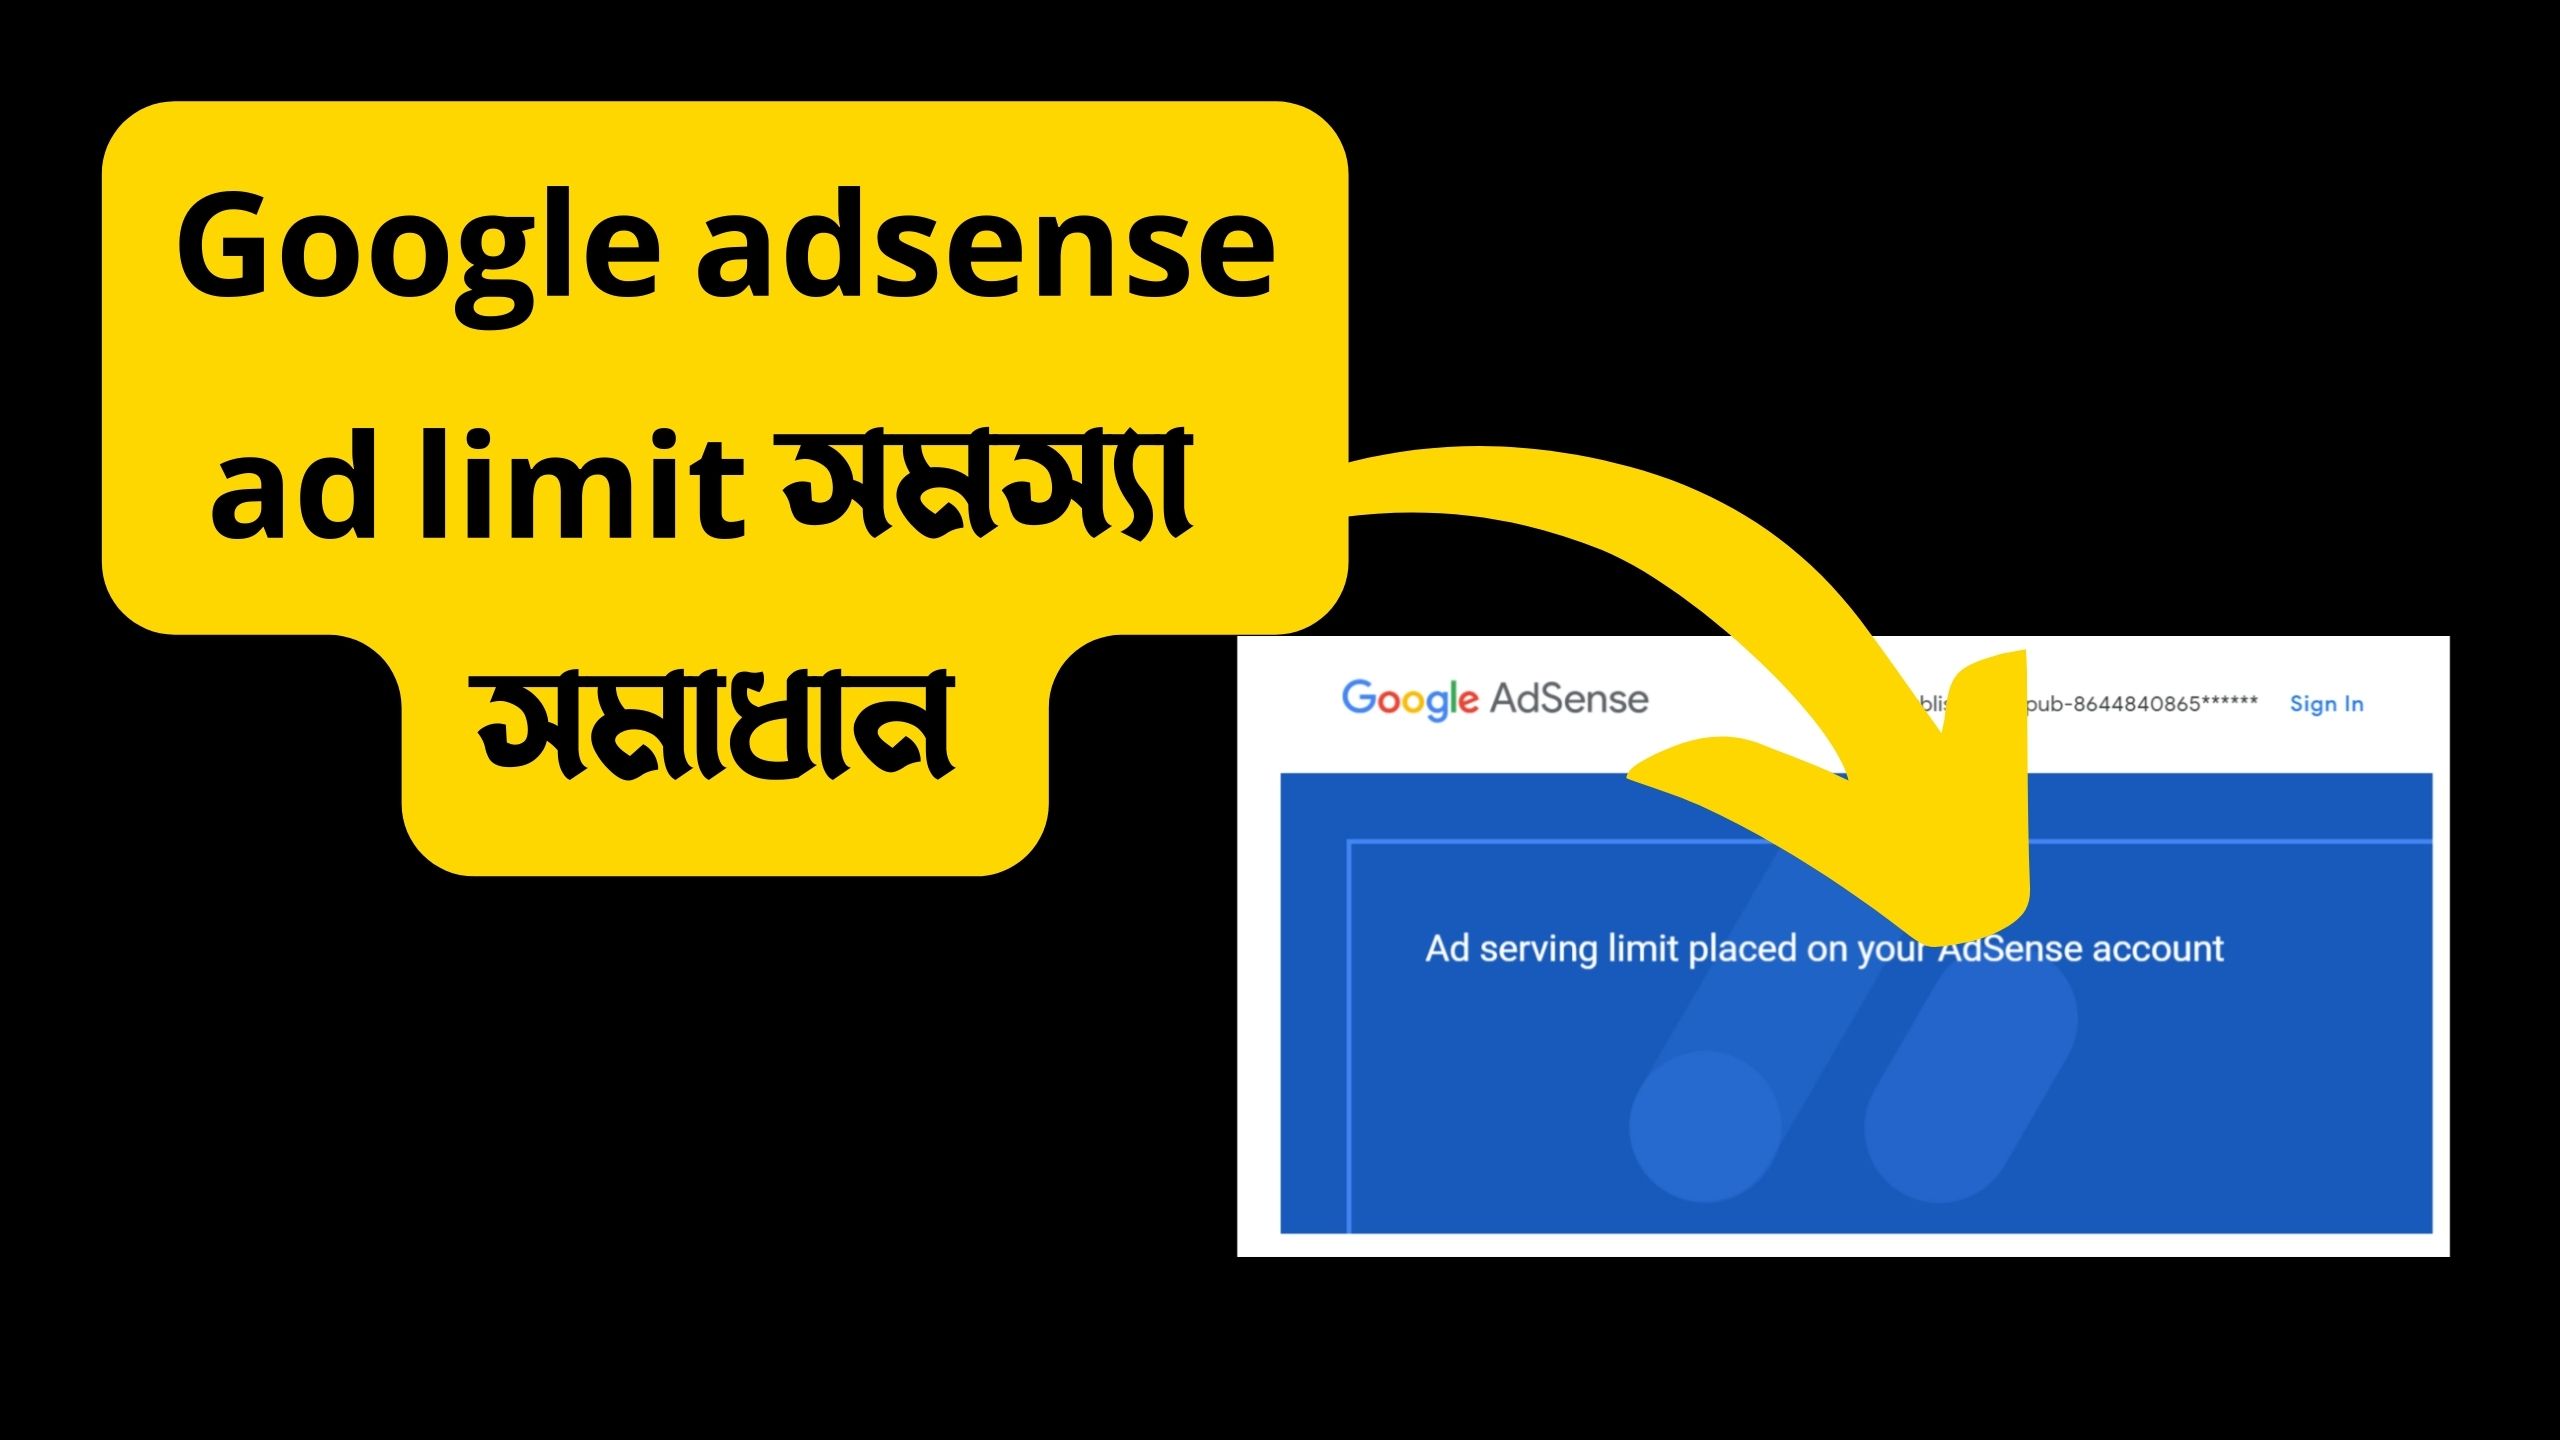 Google adsense ad limit